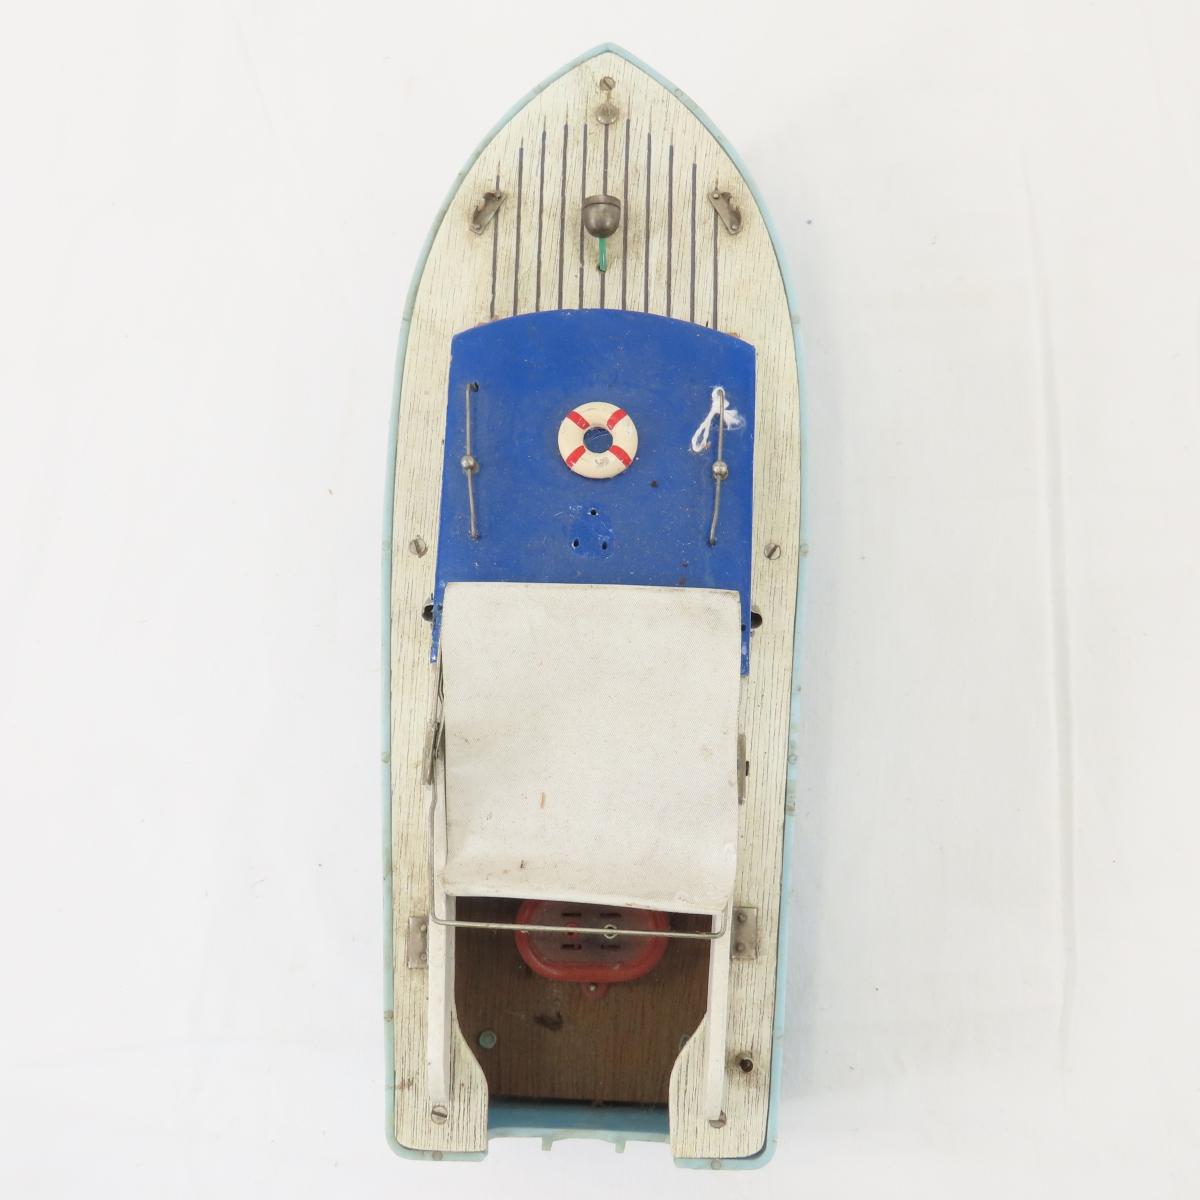 Vintage Wood & Plastic Boat Model with Engine